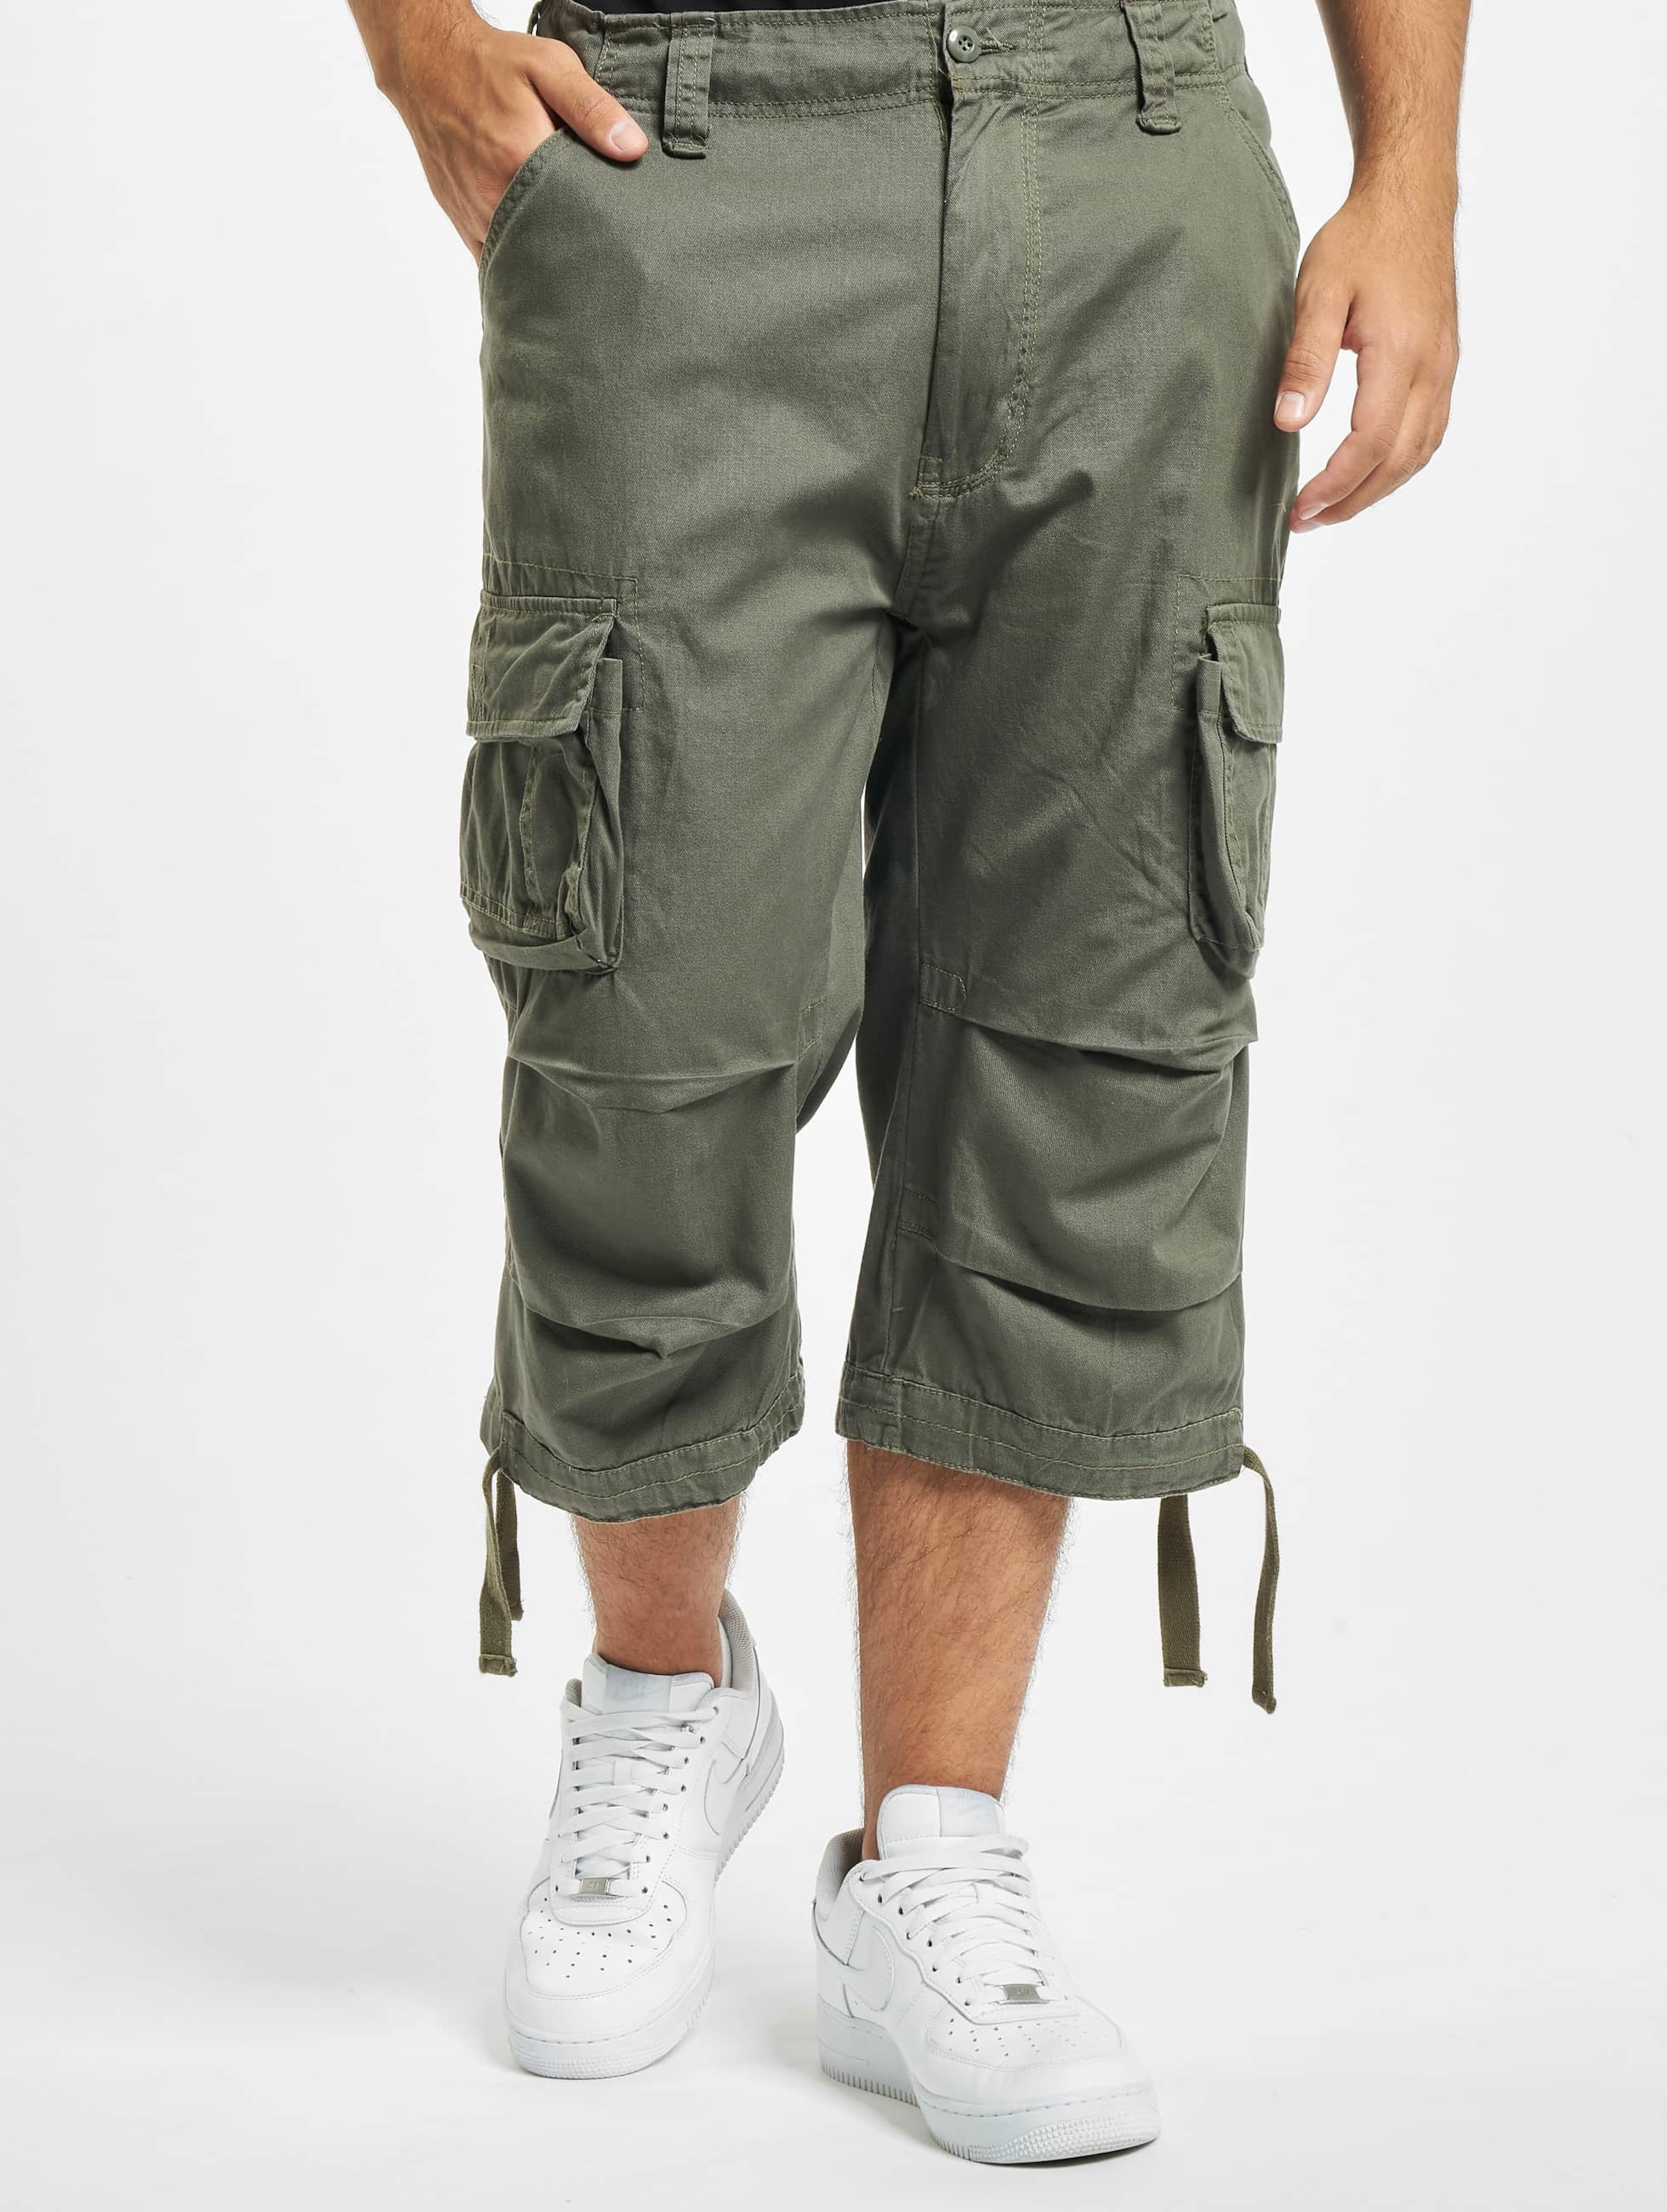 Brandit URBAN LEGEND Cargo 3/4 Army Shorts | eBay